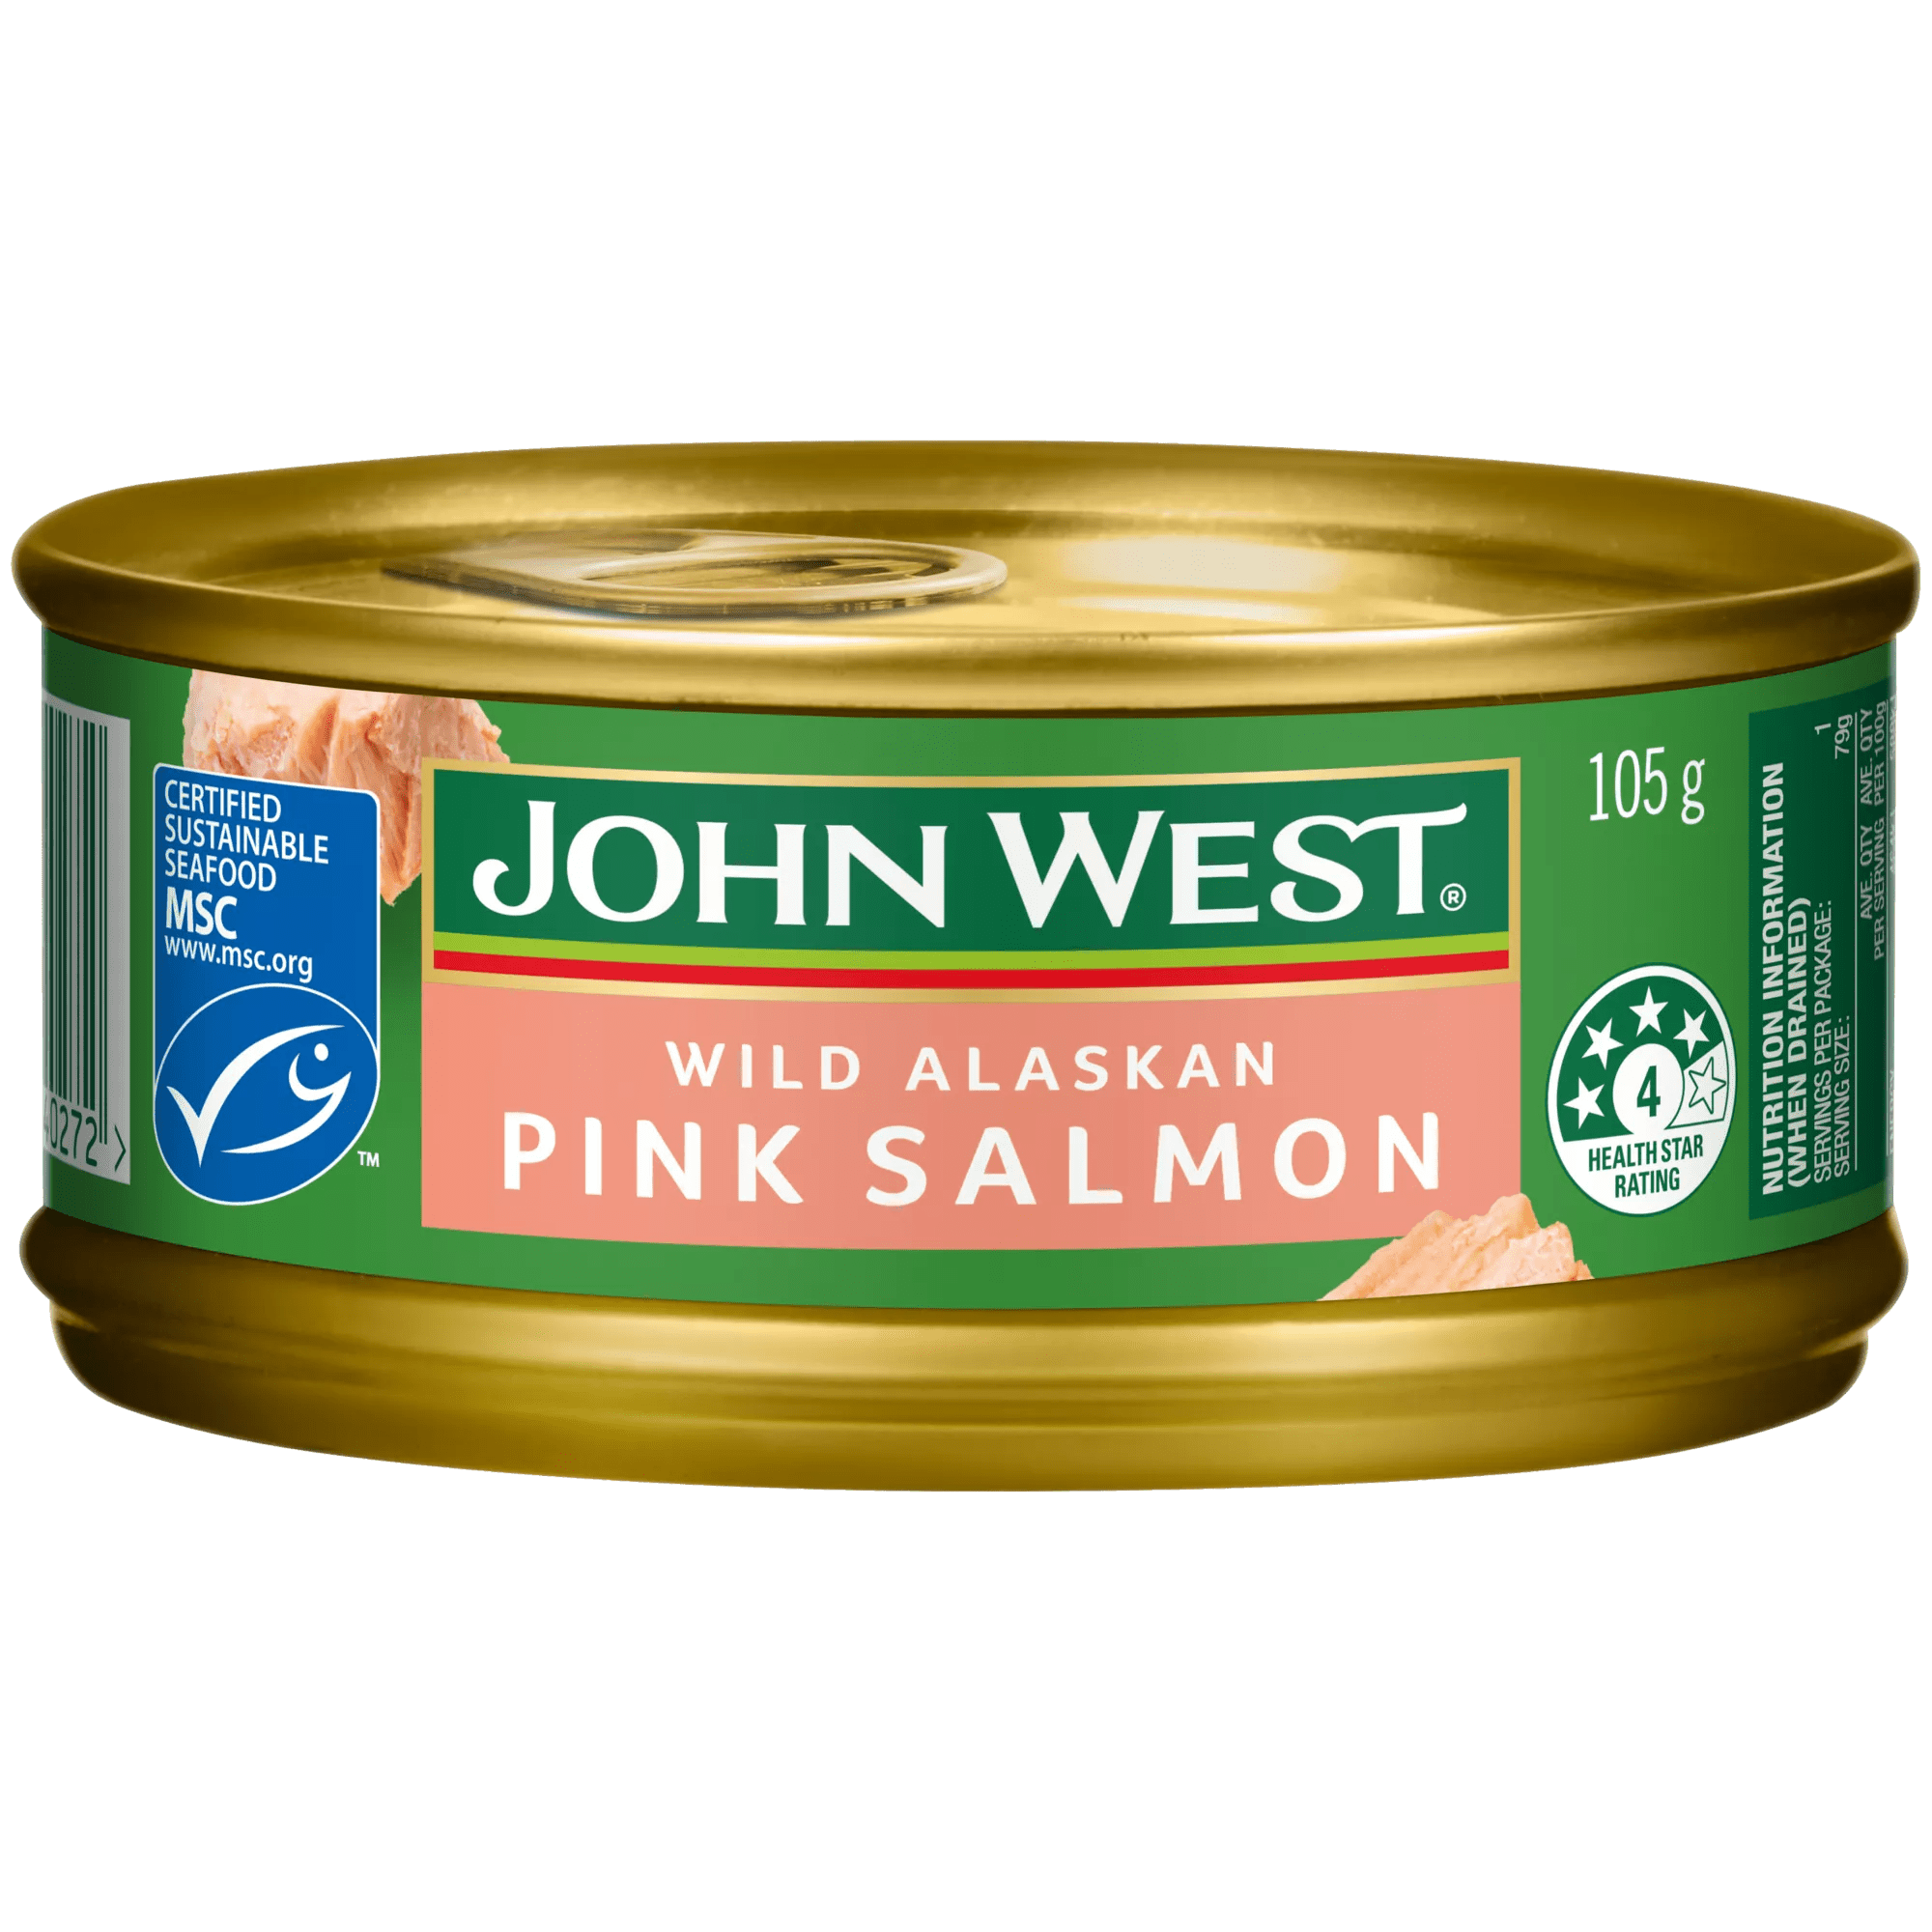 John West Pink Salmon 105g